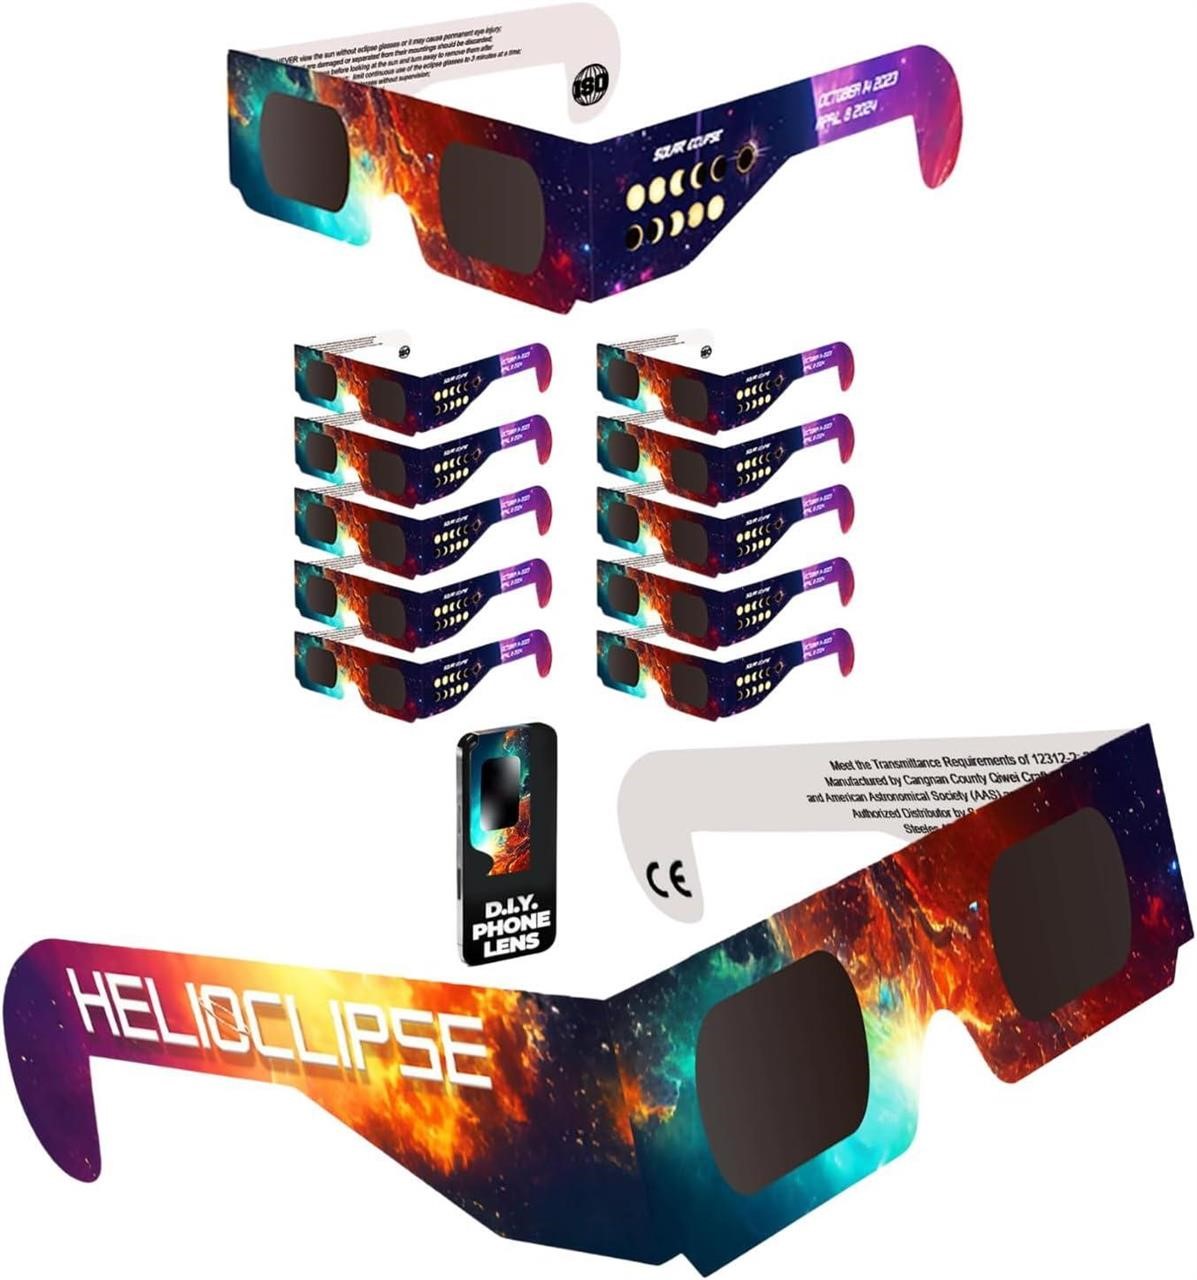 12 Pack Helioclipse Solar Eclipse Glasses